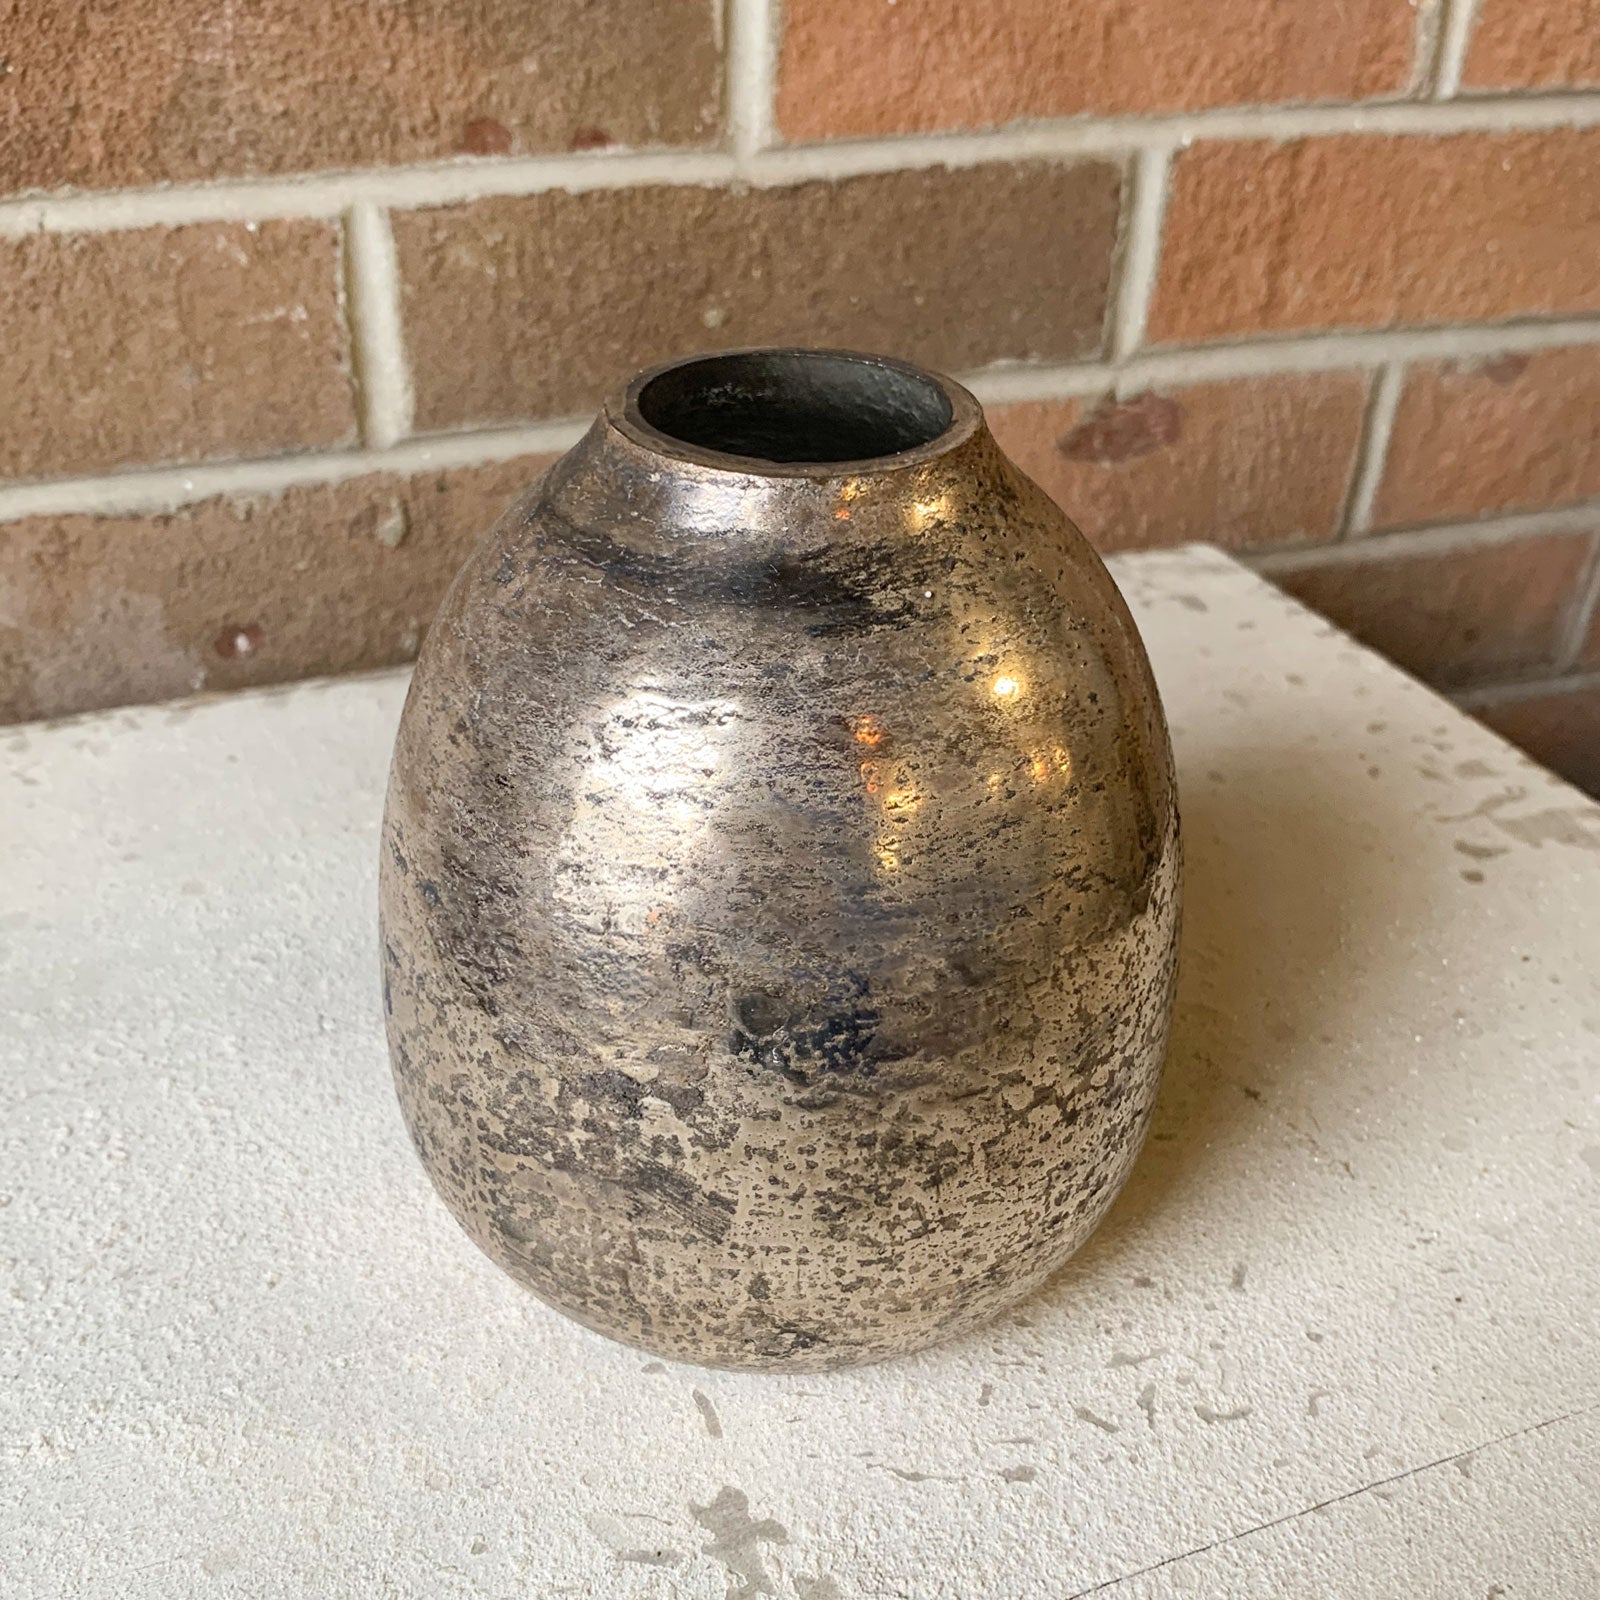 Siren Vase